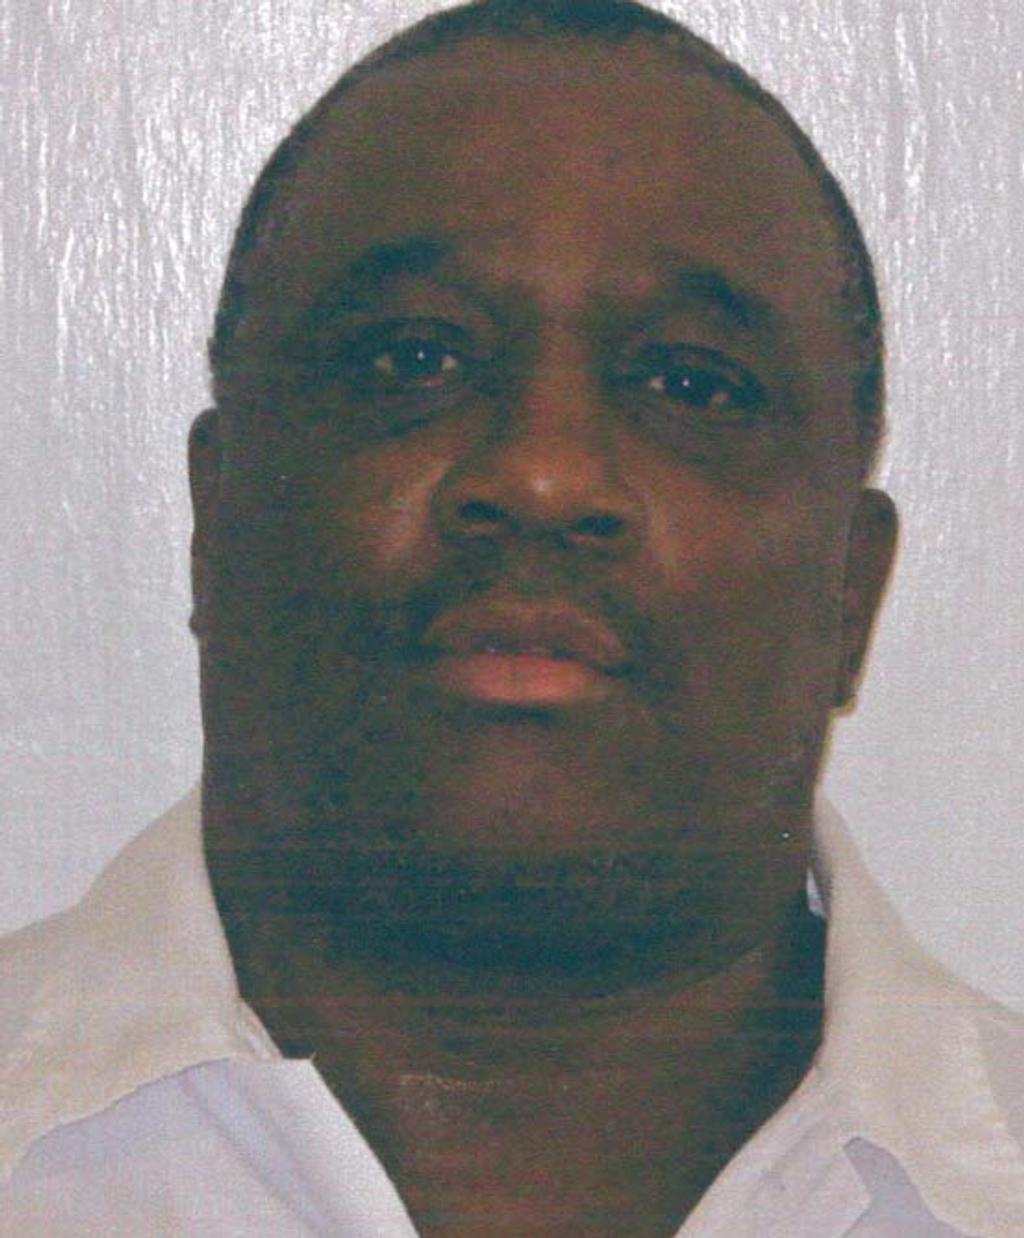 Alabama Faith Leaders Hold Panel on Death Penalty, Spotlight 'Rocky' Myers' Case of Possible Innocence